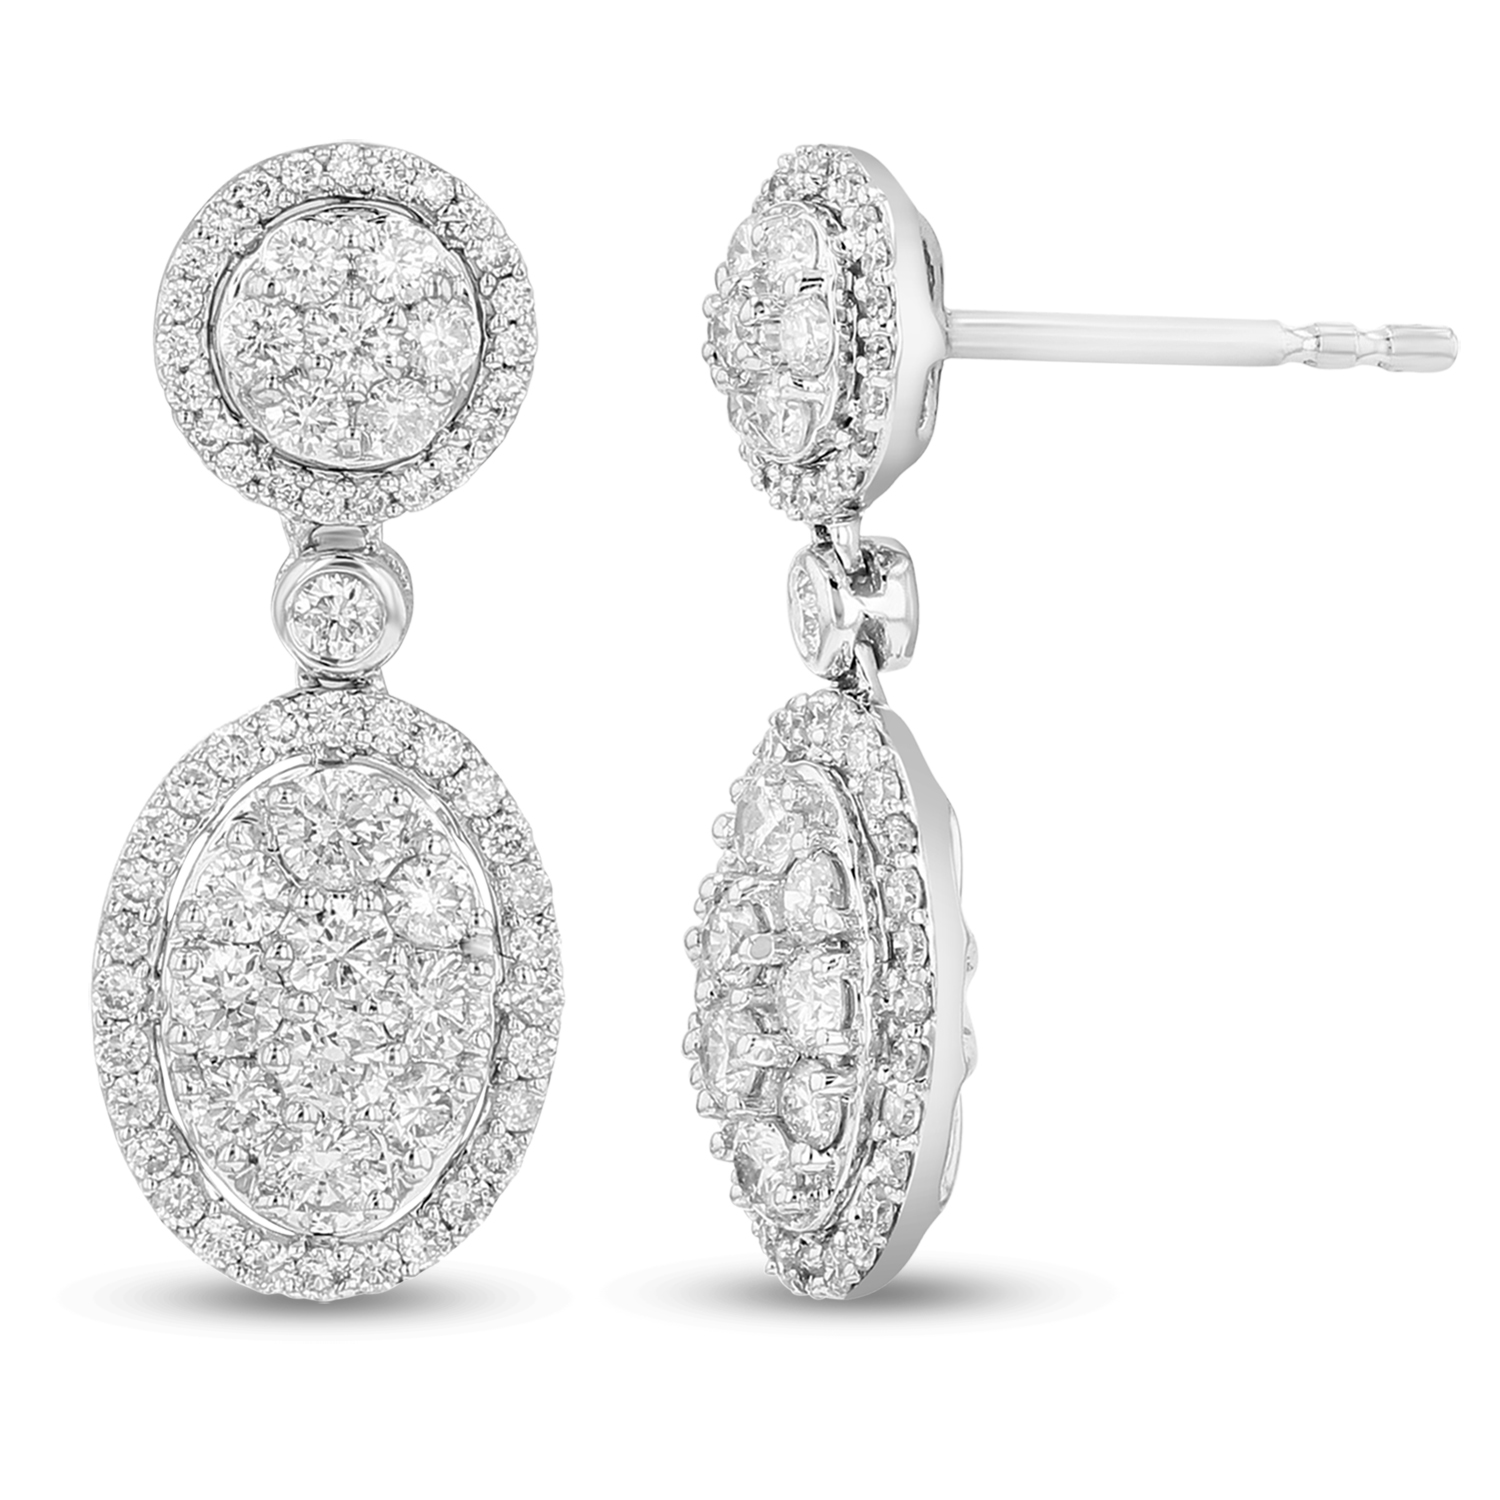 View 1.10ctw Diamond Earrings in 14k White Gold